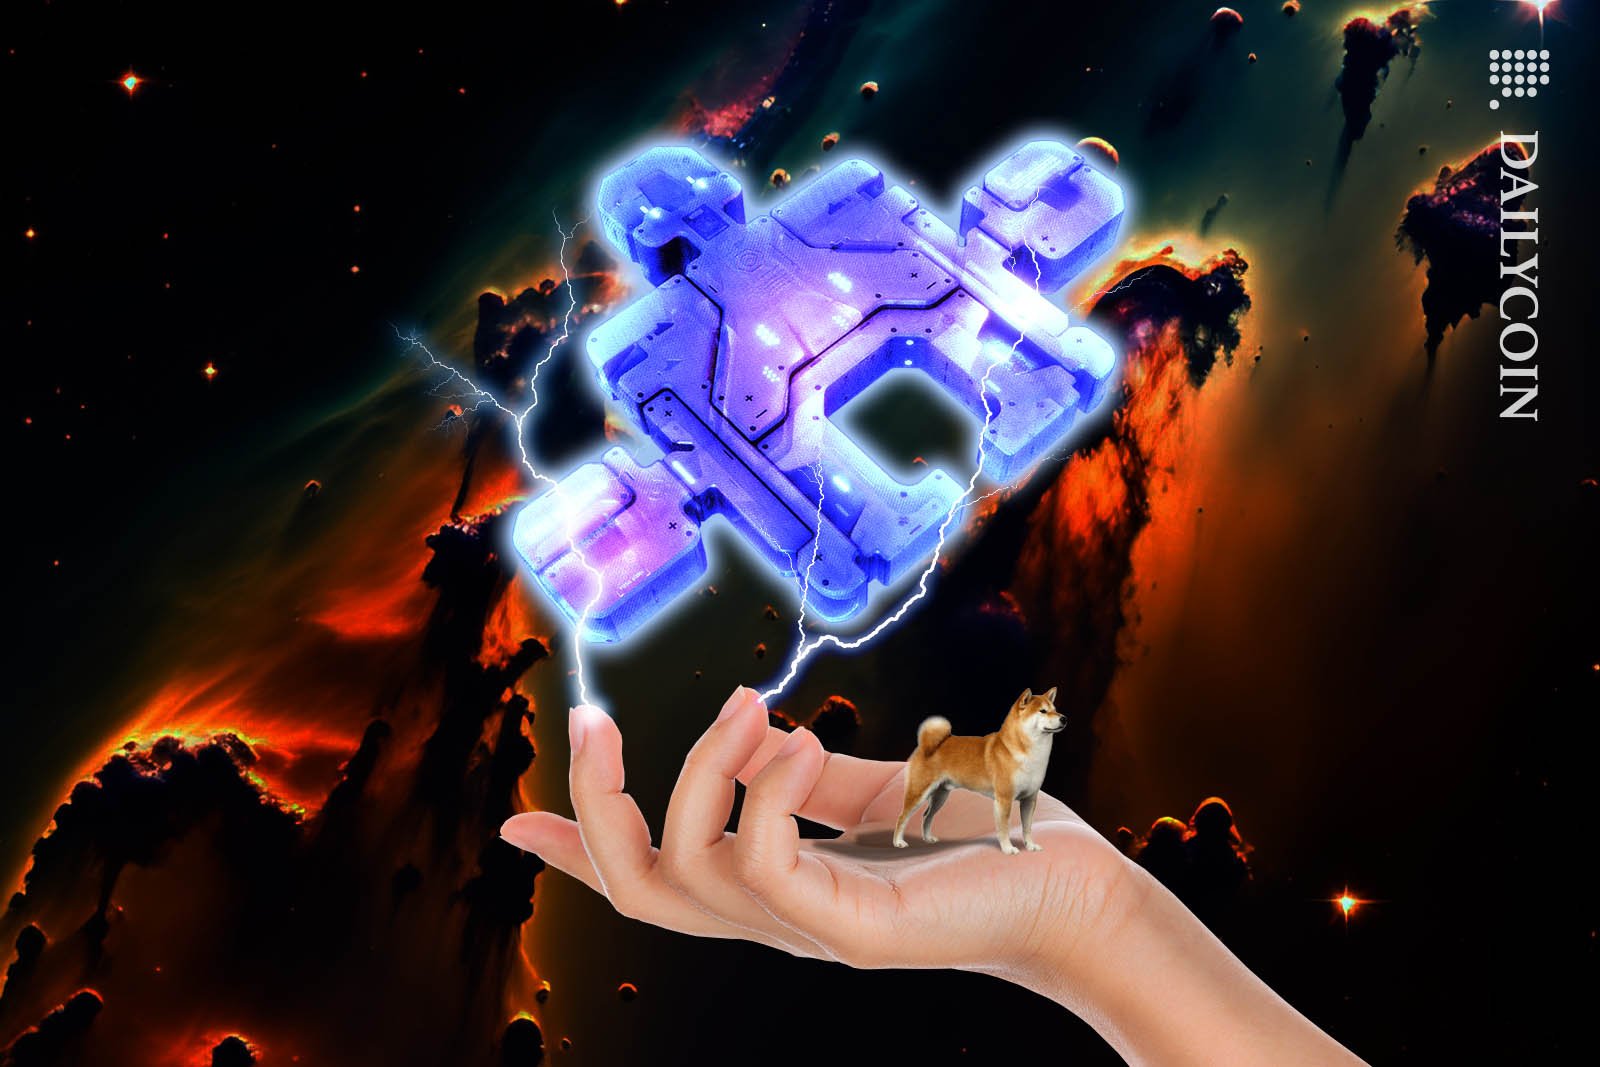 Futuristic puzzle piece levitating above a hand holding a Shiba inu.